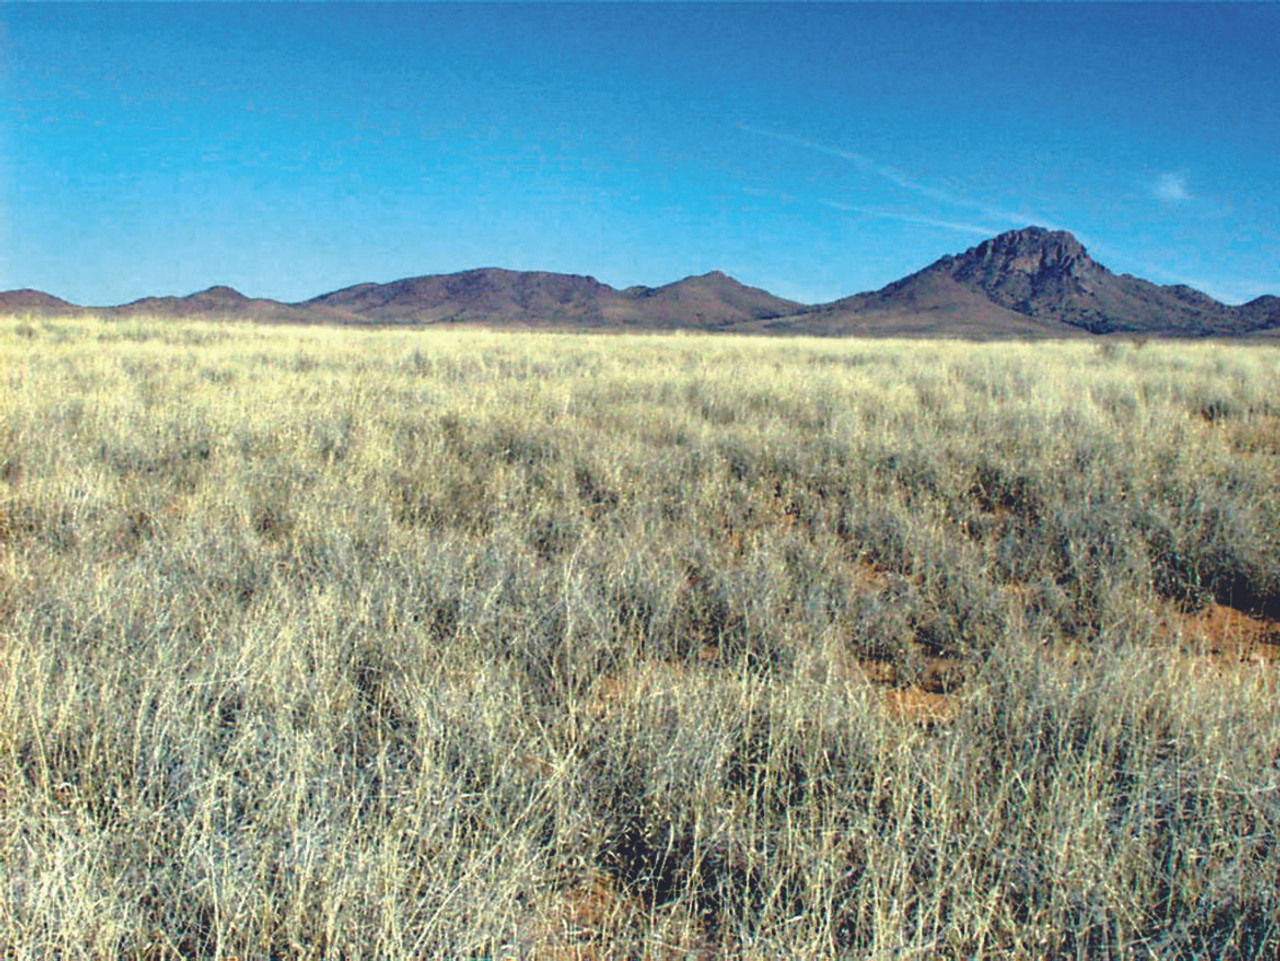 Chihuahuan Desert Trans-Pecos